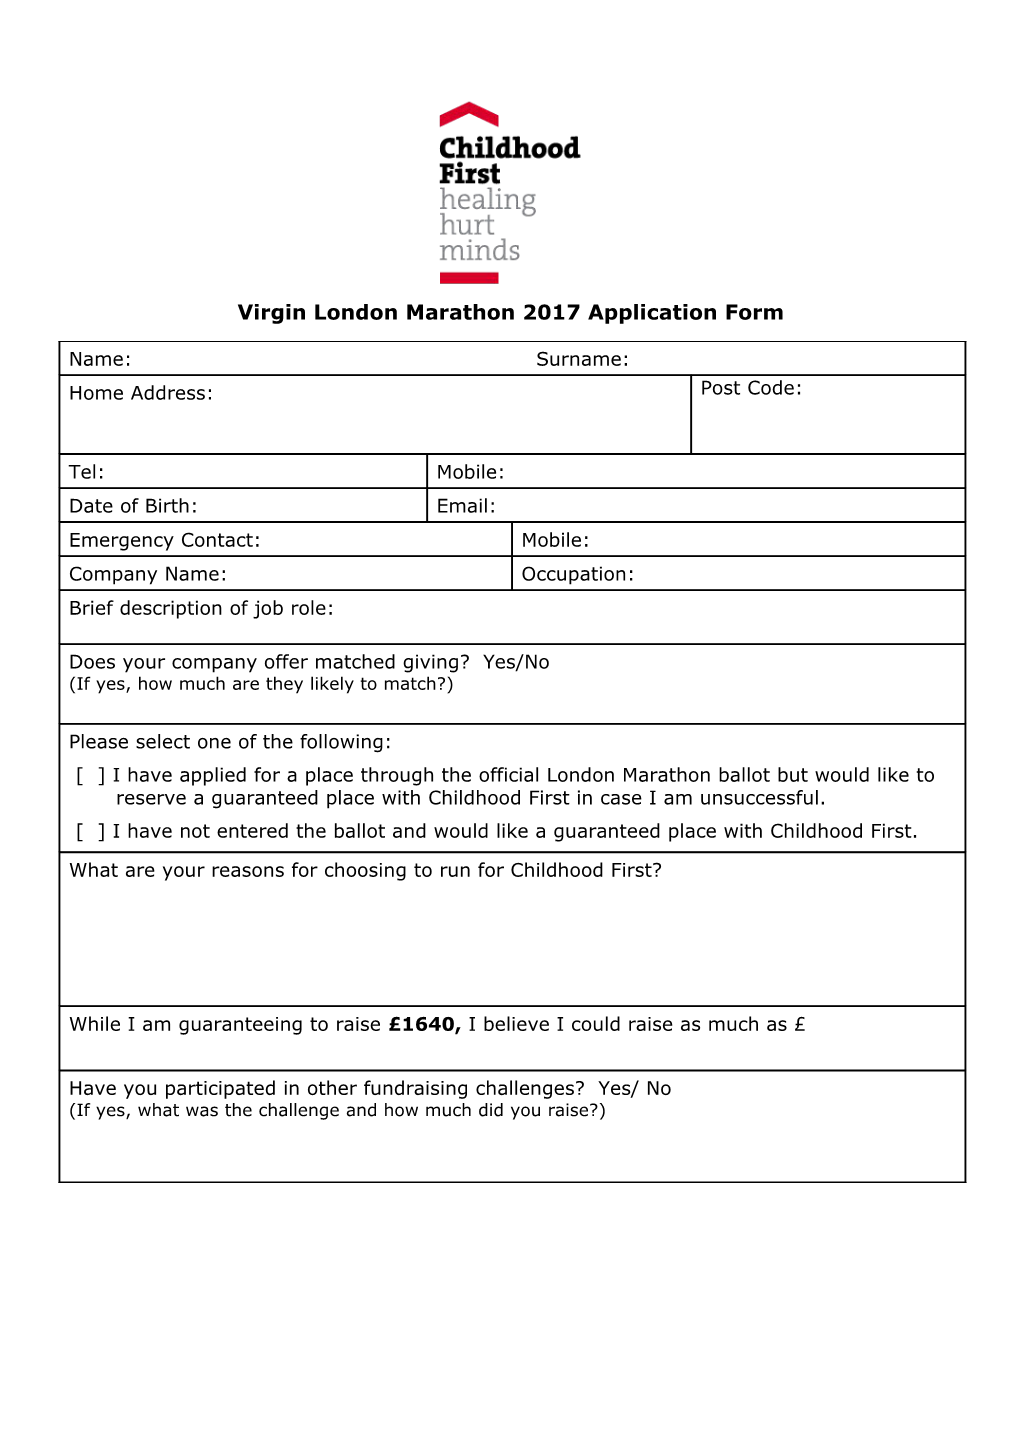 Virgin London Marathon 2017 Application Form